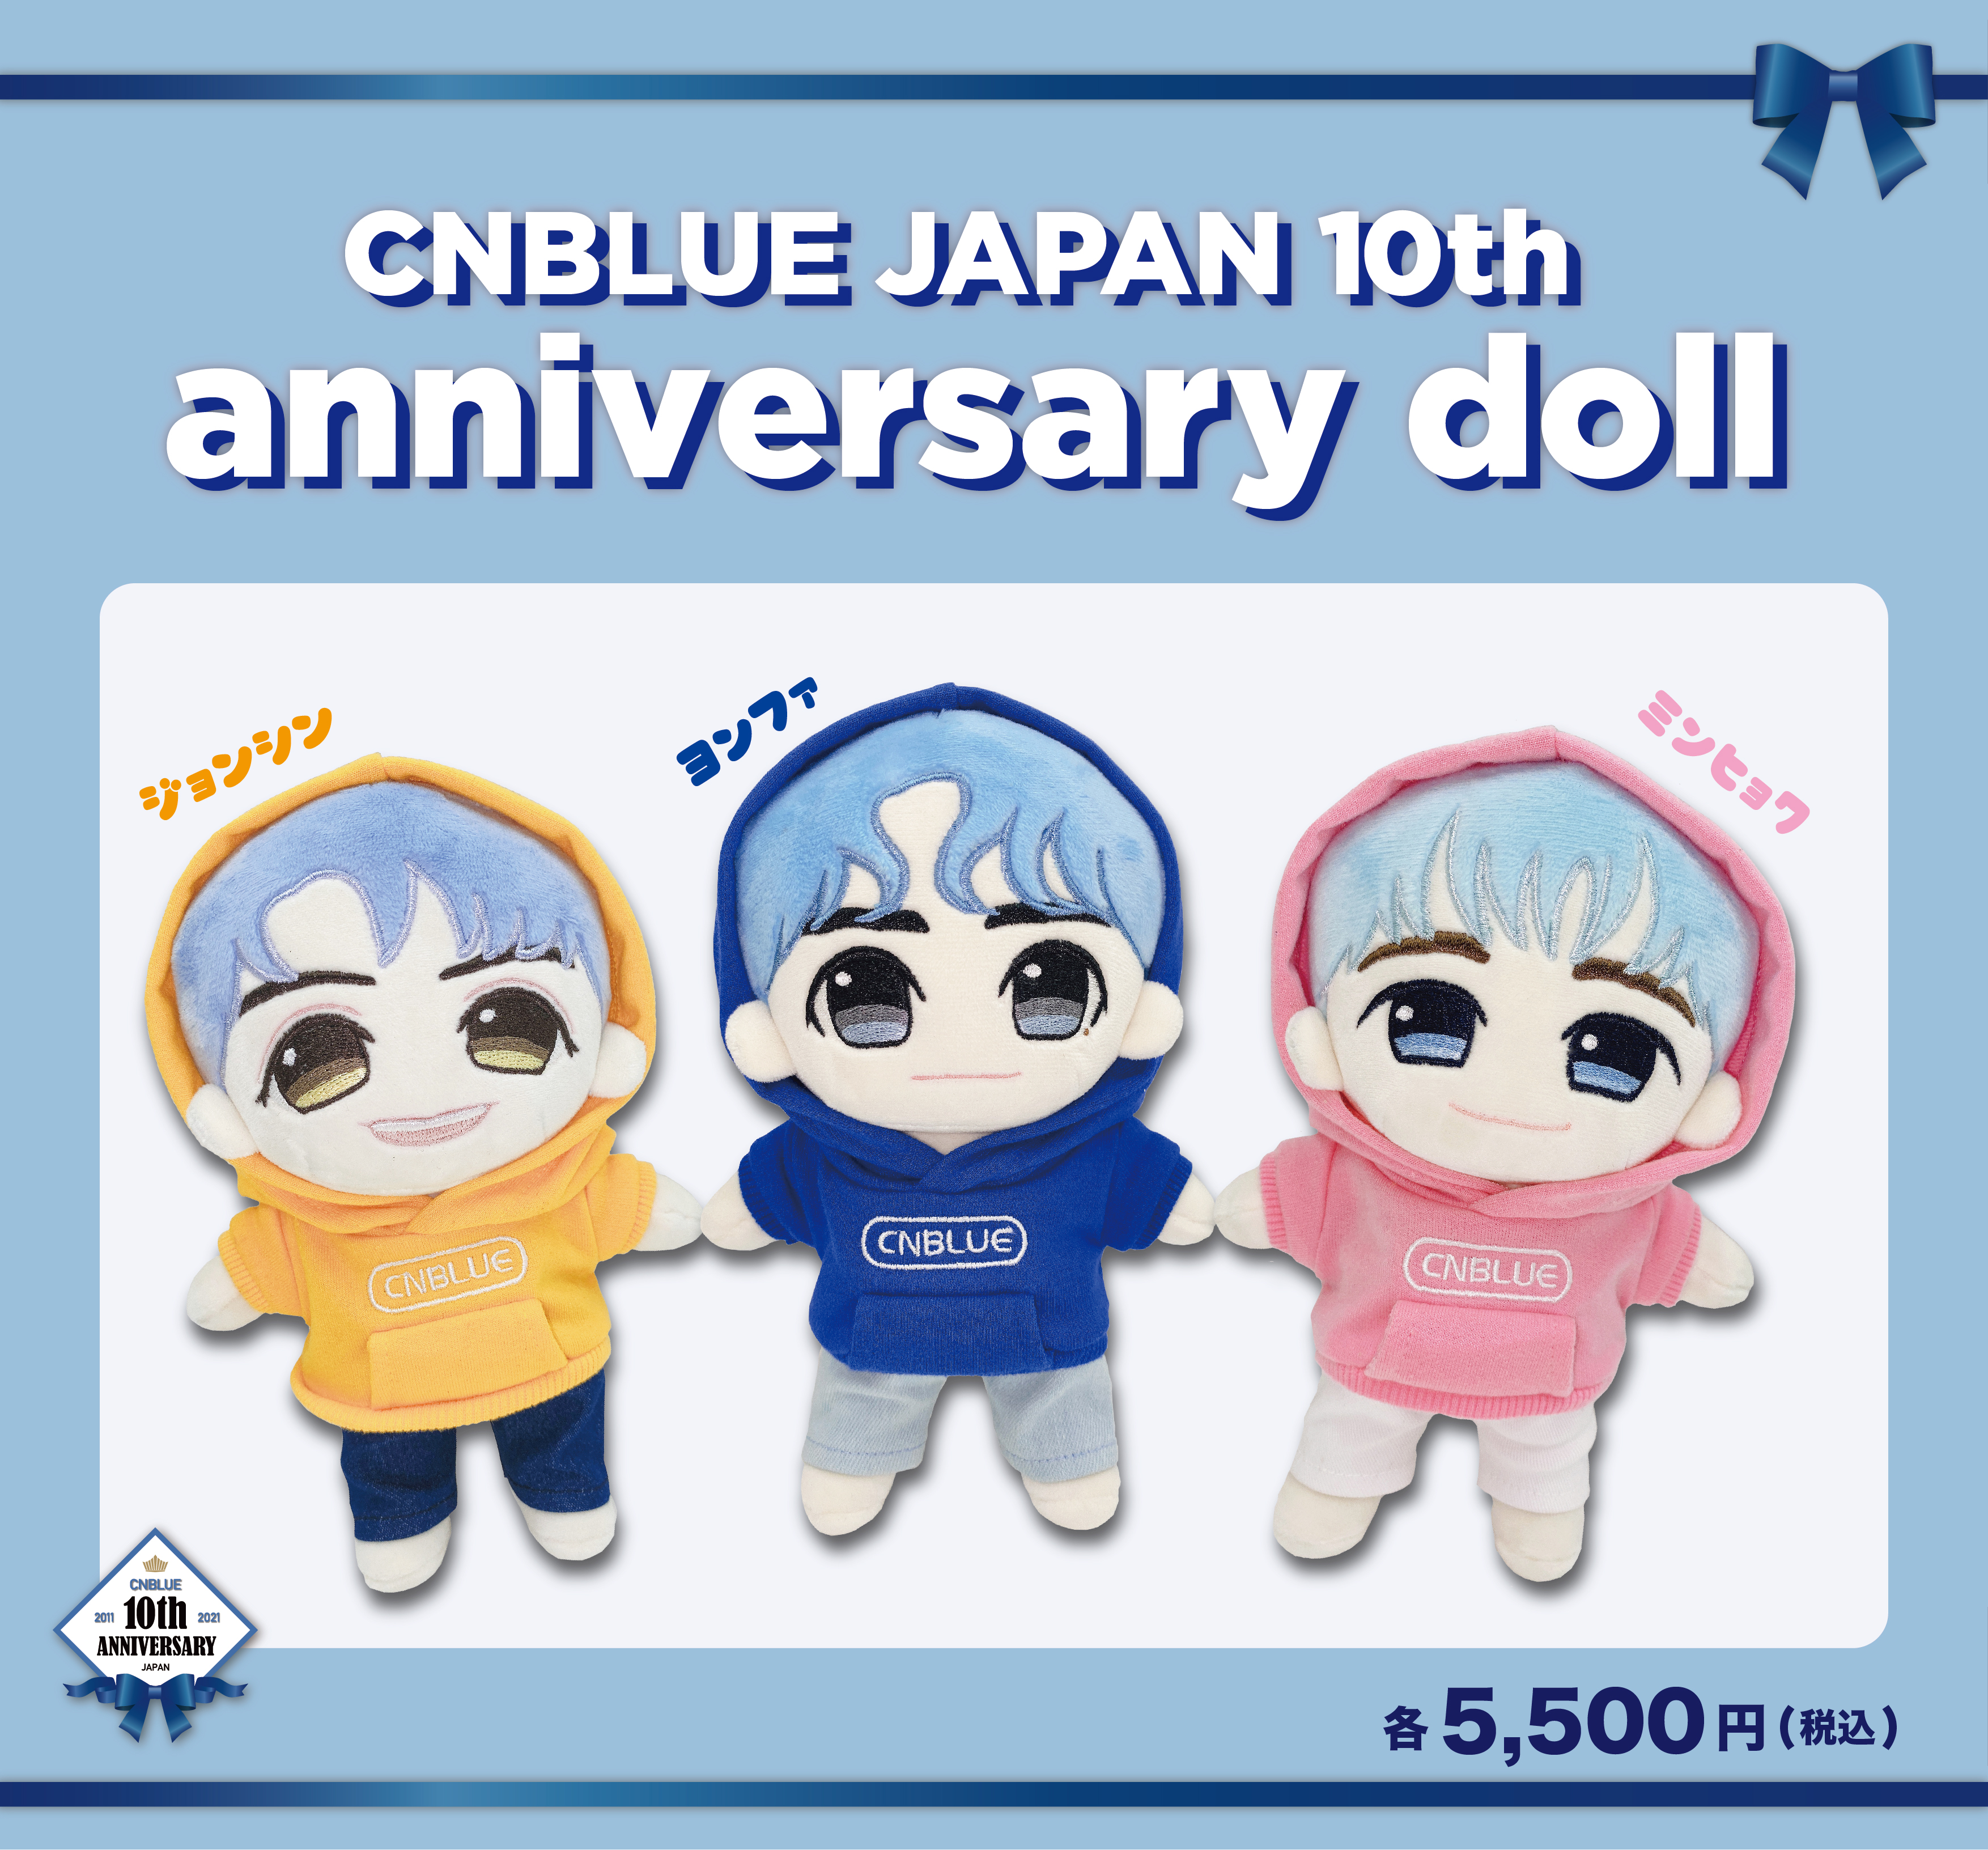 CNBLUE JAPAN 10 th anniversary doll